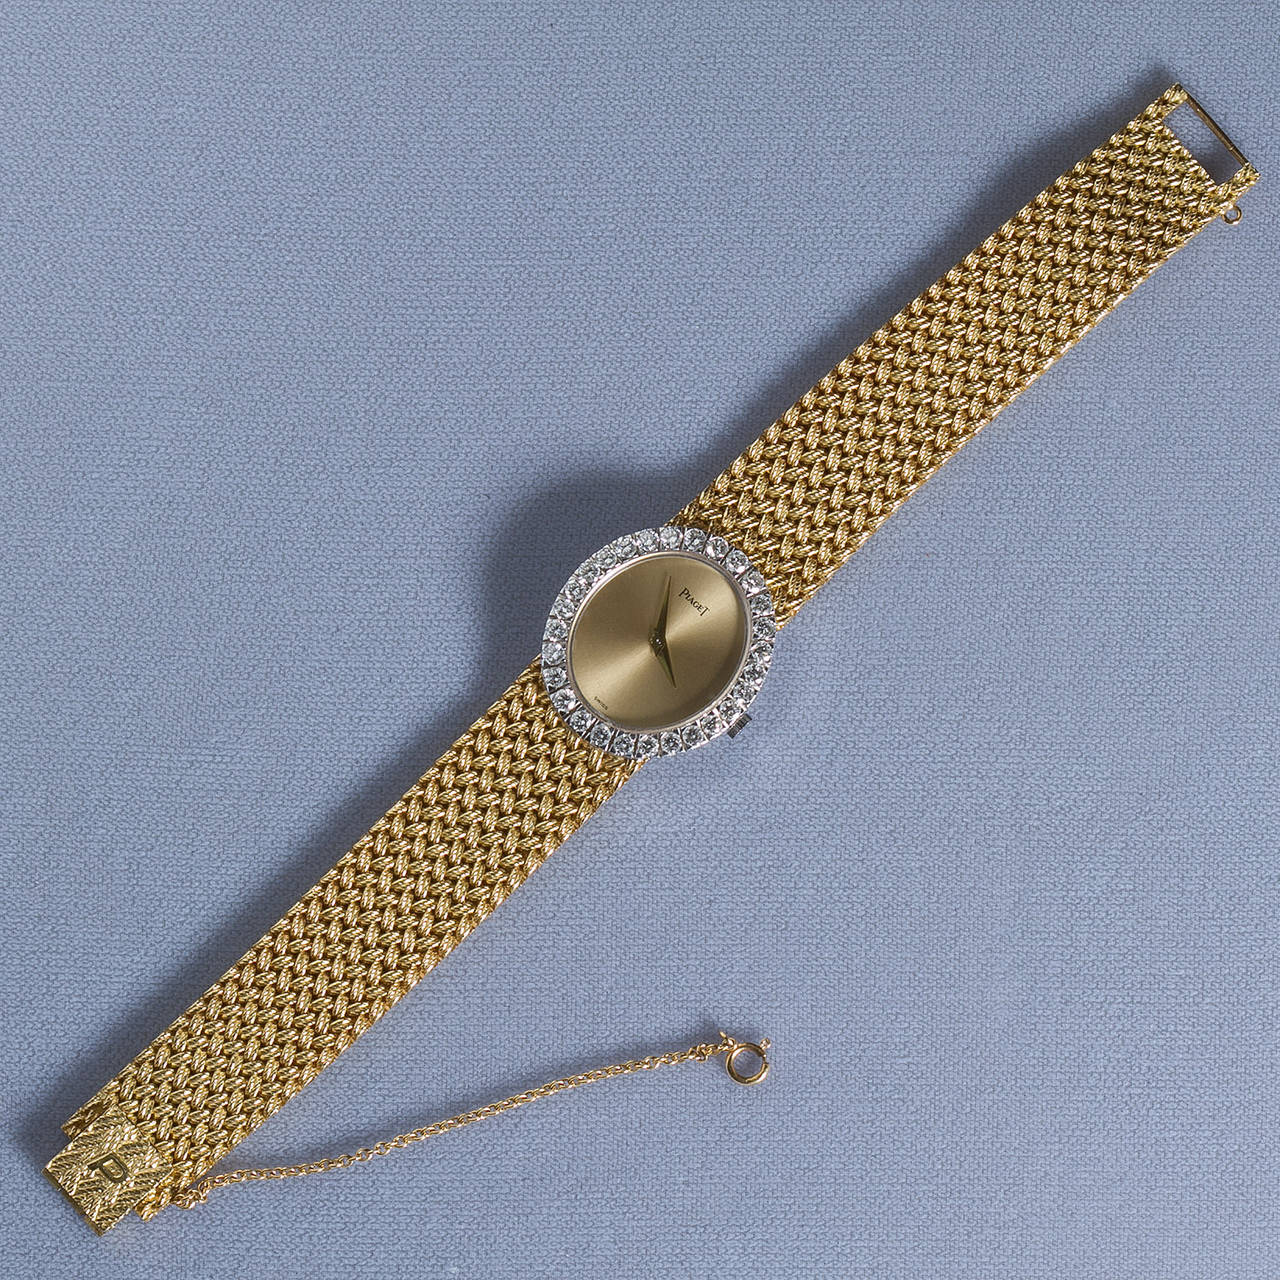 Women's Piaget Rare Lady's Elegant Diamond Oval Gold Bracelet Wristwatch